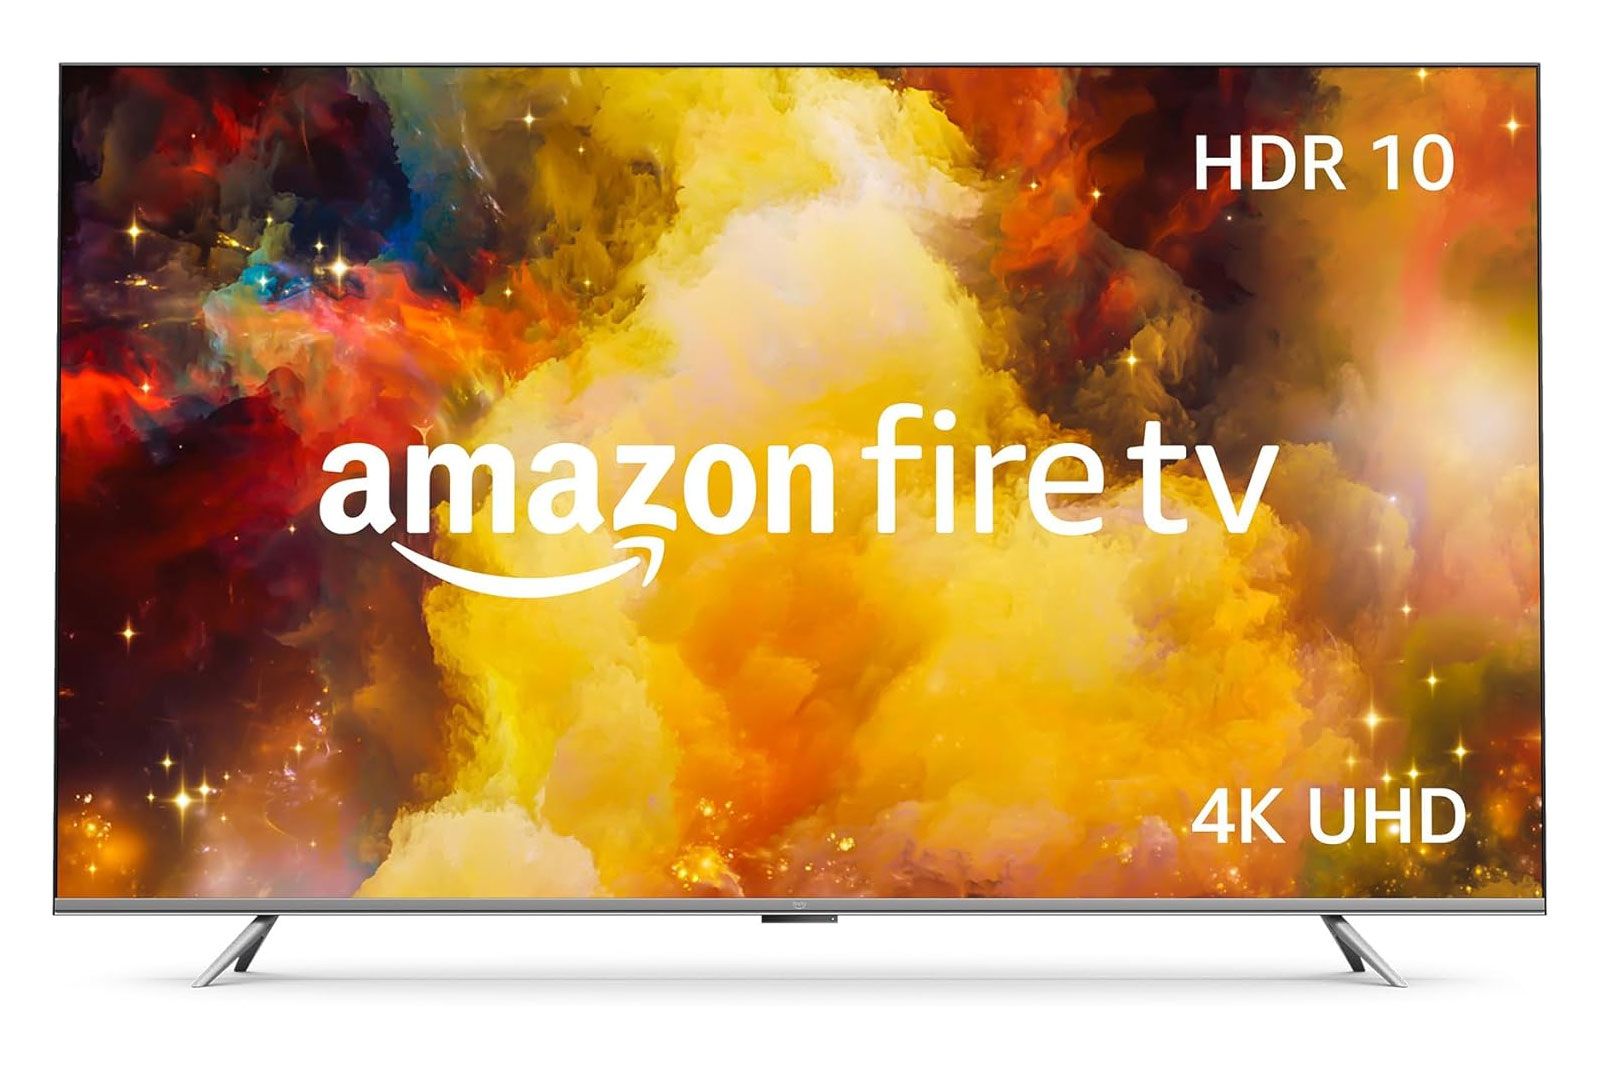 Amazon Fire TV Omni Series